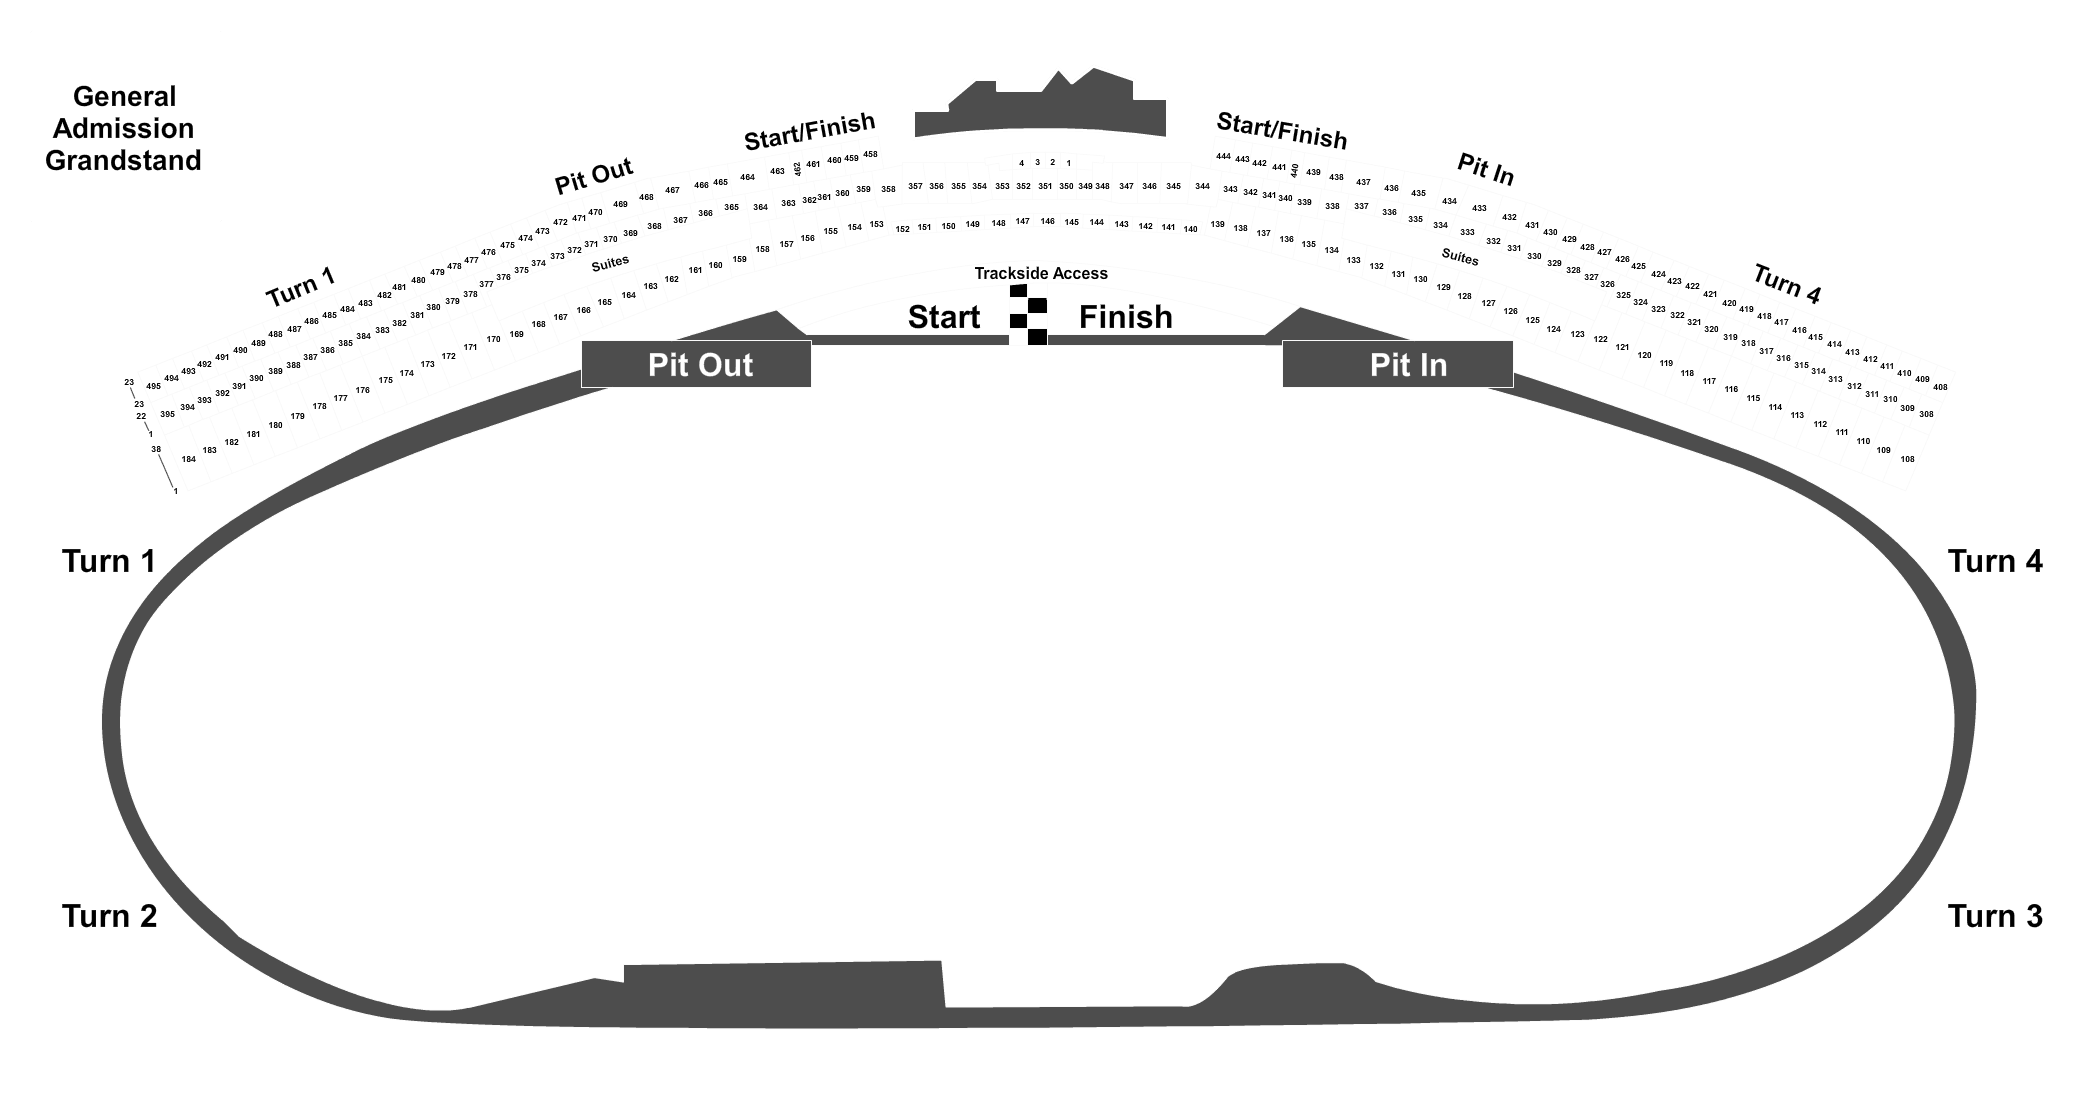 Daytona Interactive Seating Chart